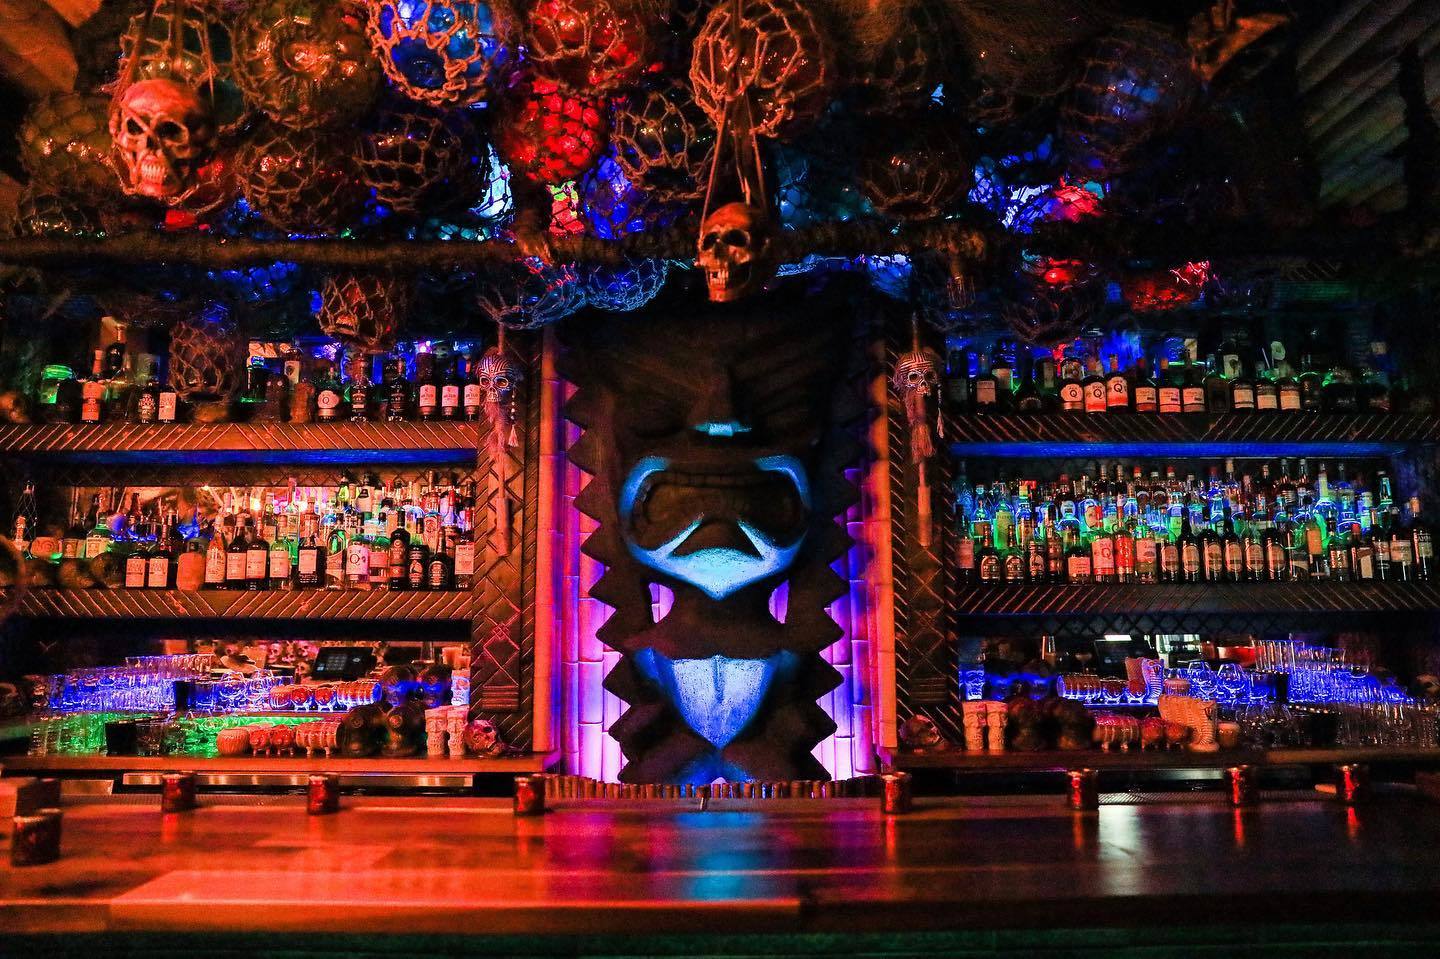 tiki bar with dark lighting and colorful uplights to show decor